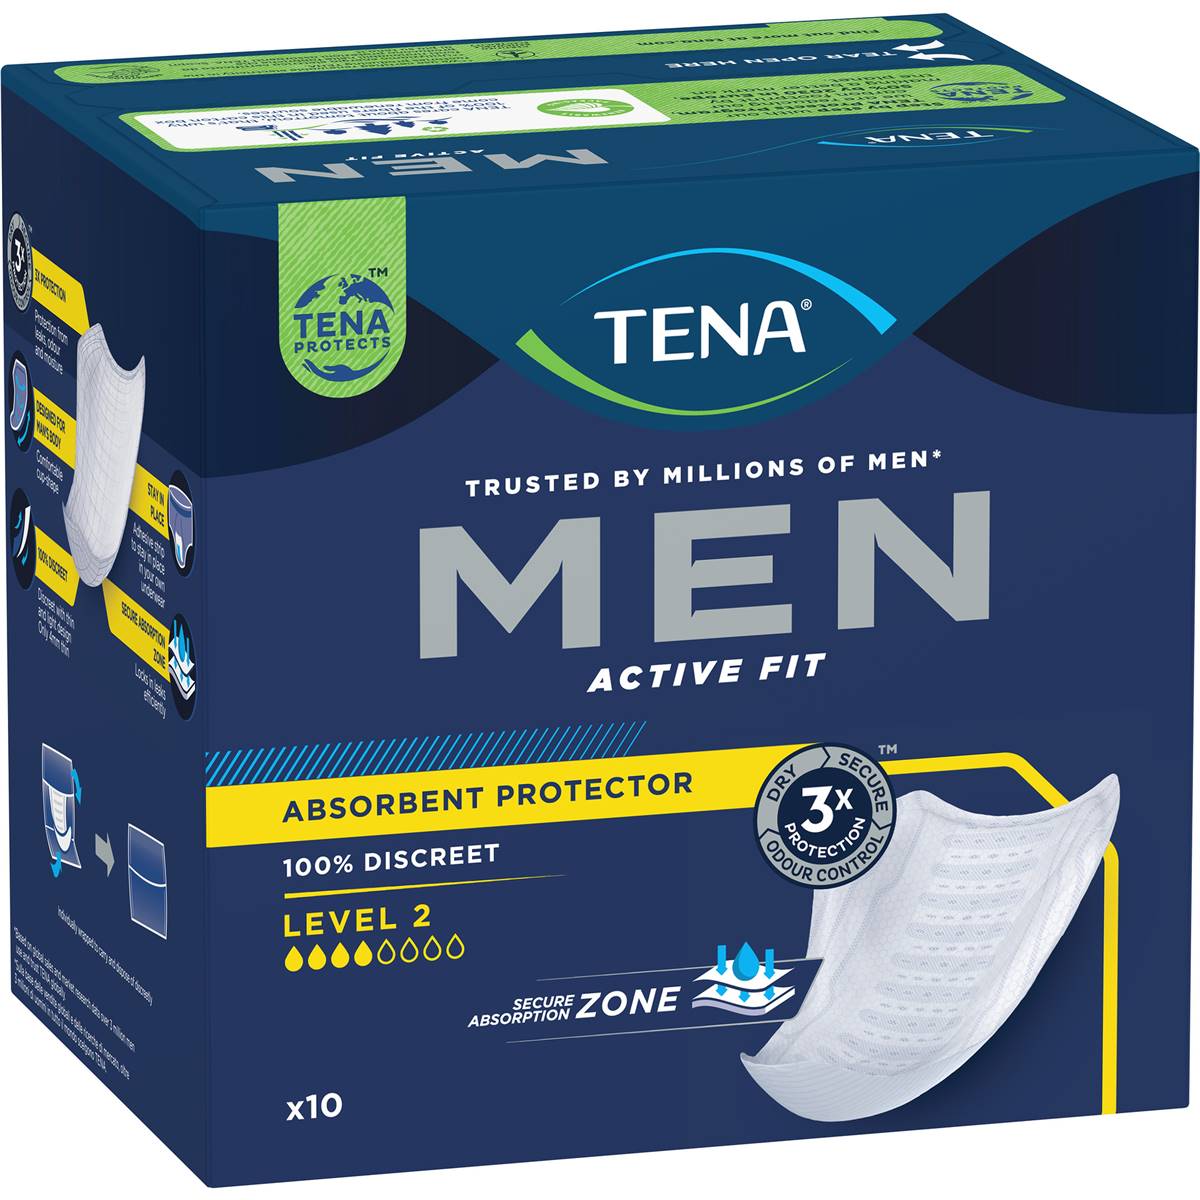 Tena Men Absorbent Protector Level 2 10 Pack